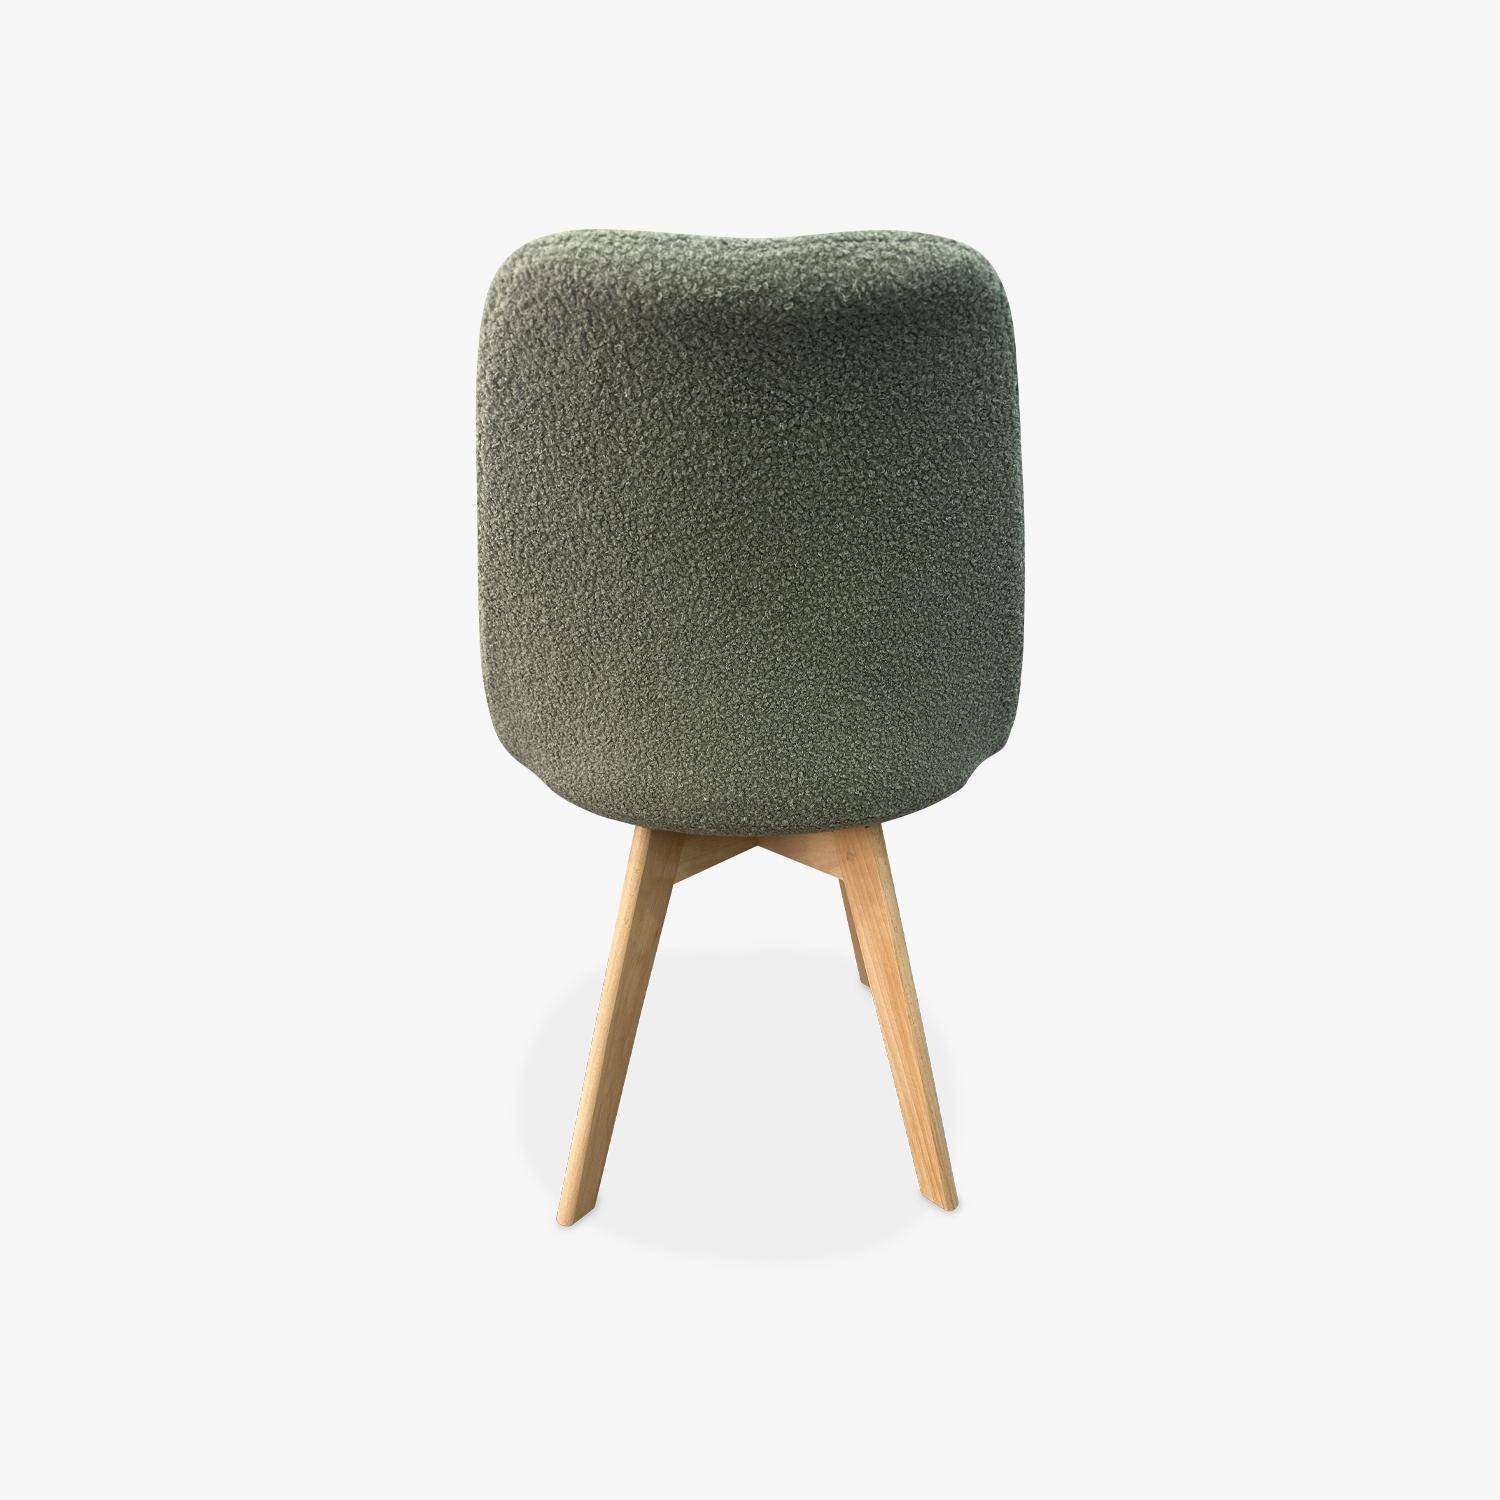 4er Set skandinavische Stühle mit blaßgrünem Bouclé-Bezug und Buchenholzbeinen - NILS ,sweeek,Photo4